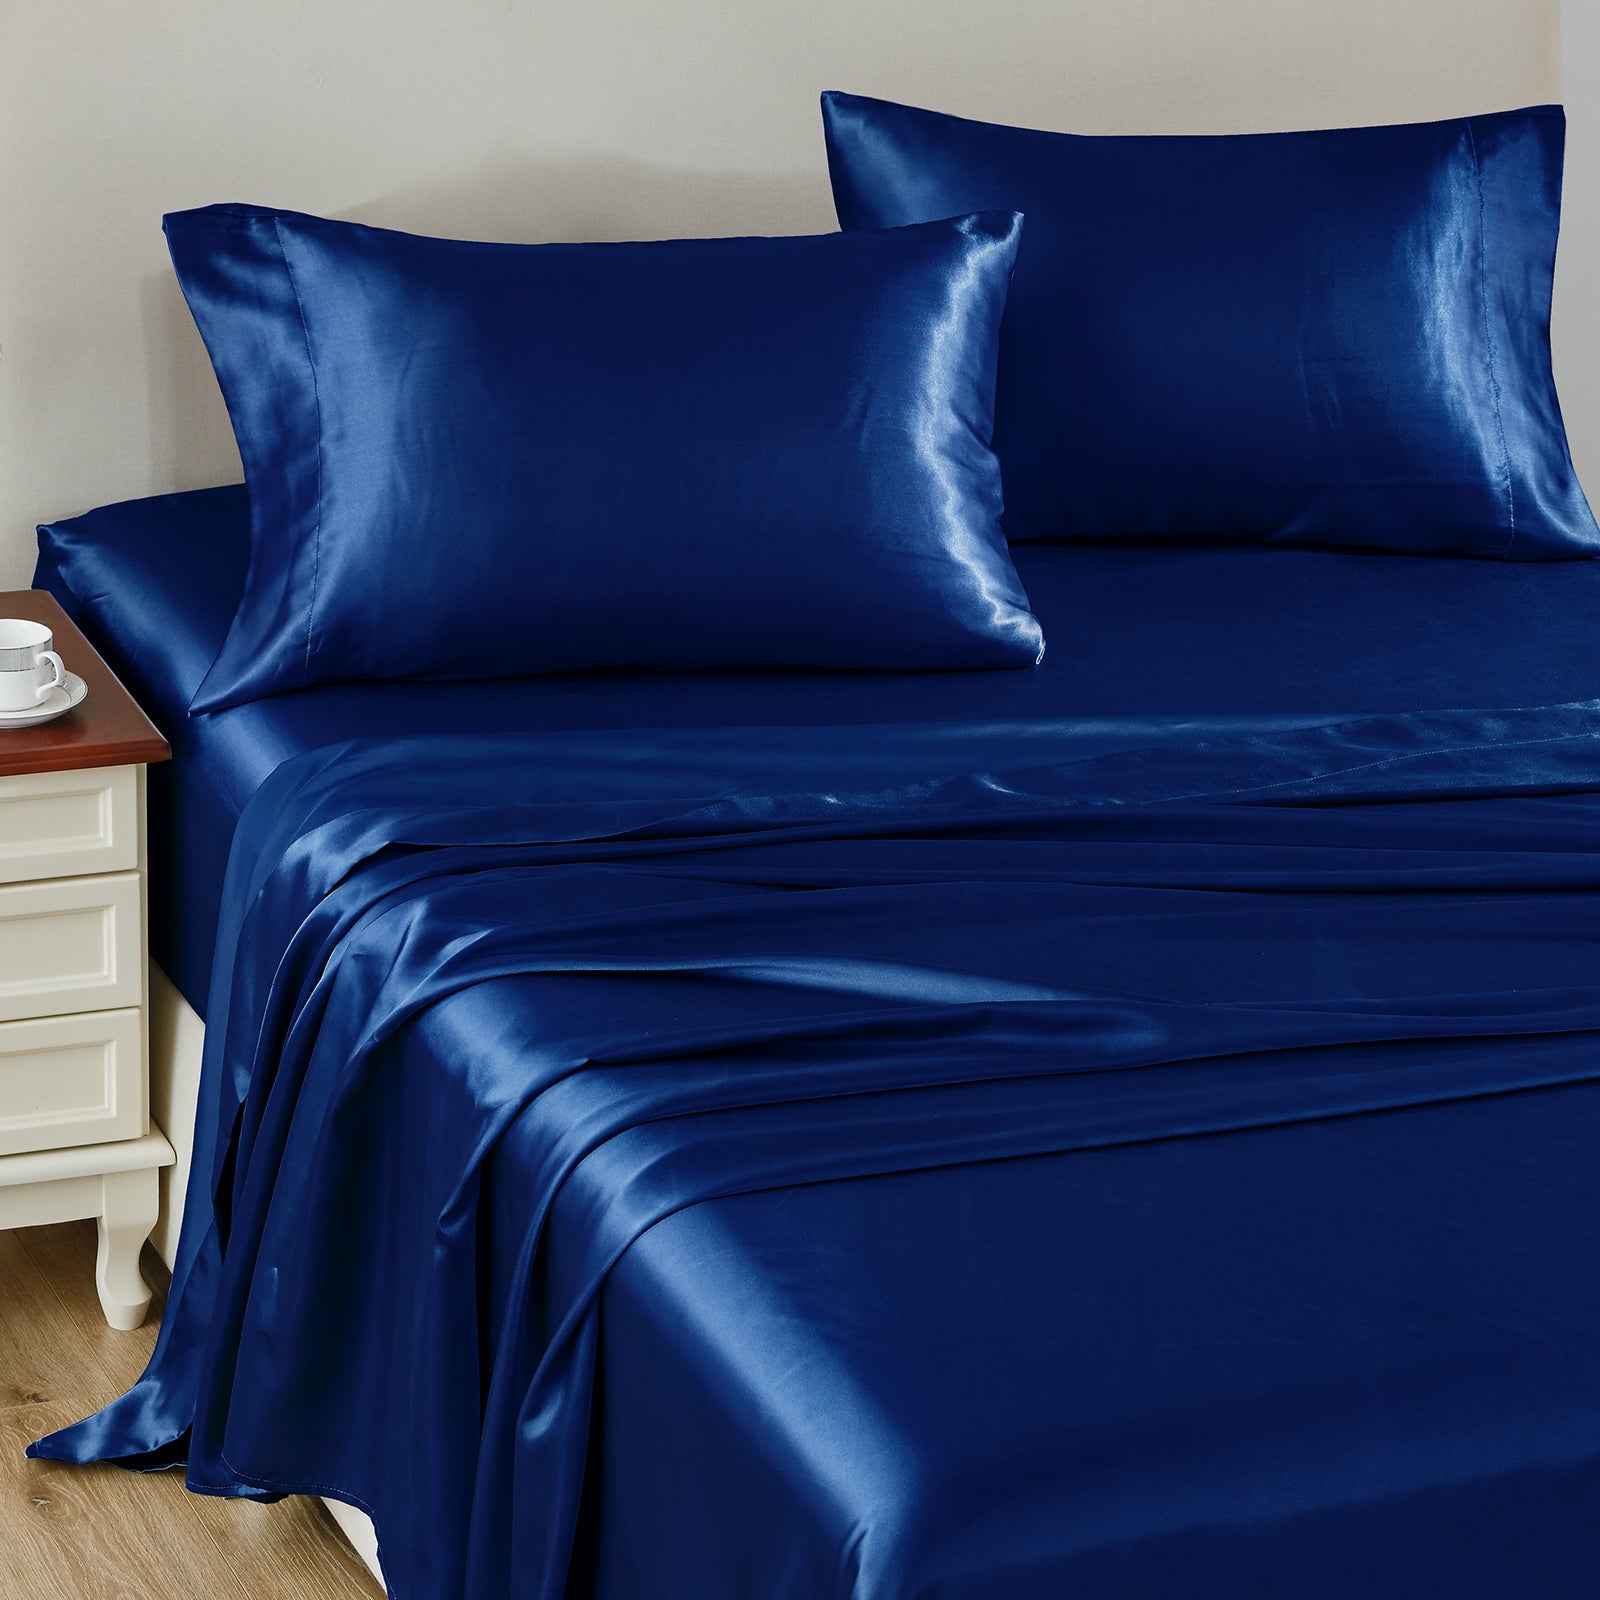 Luxbedding Satin Bed Sheets Queen Sheet Set, Navy Blue Silk Sheets